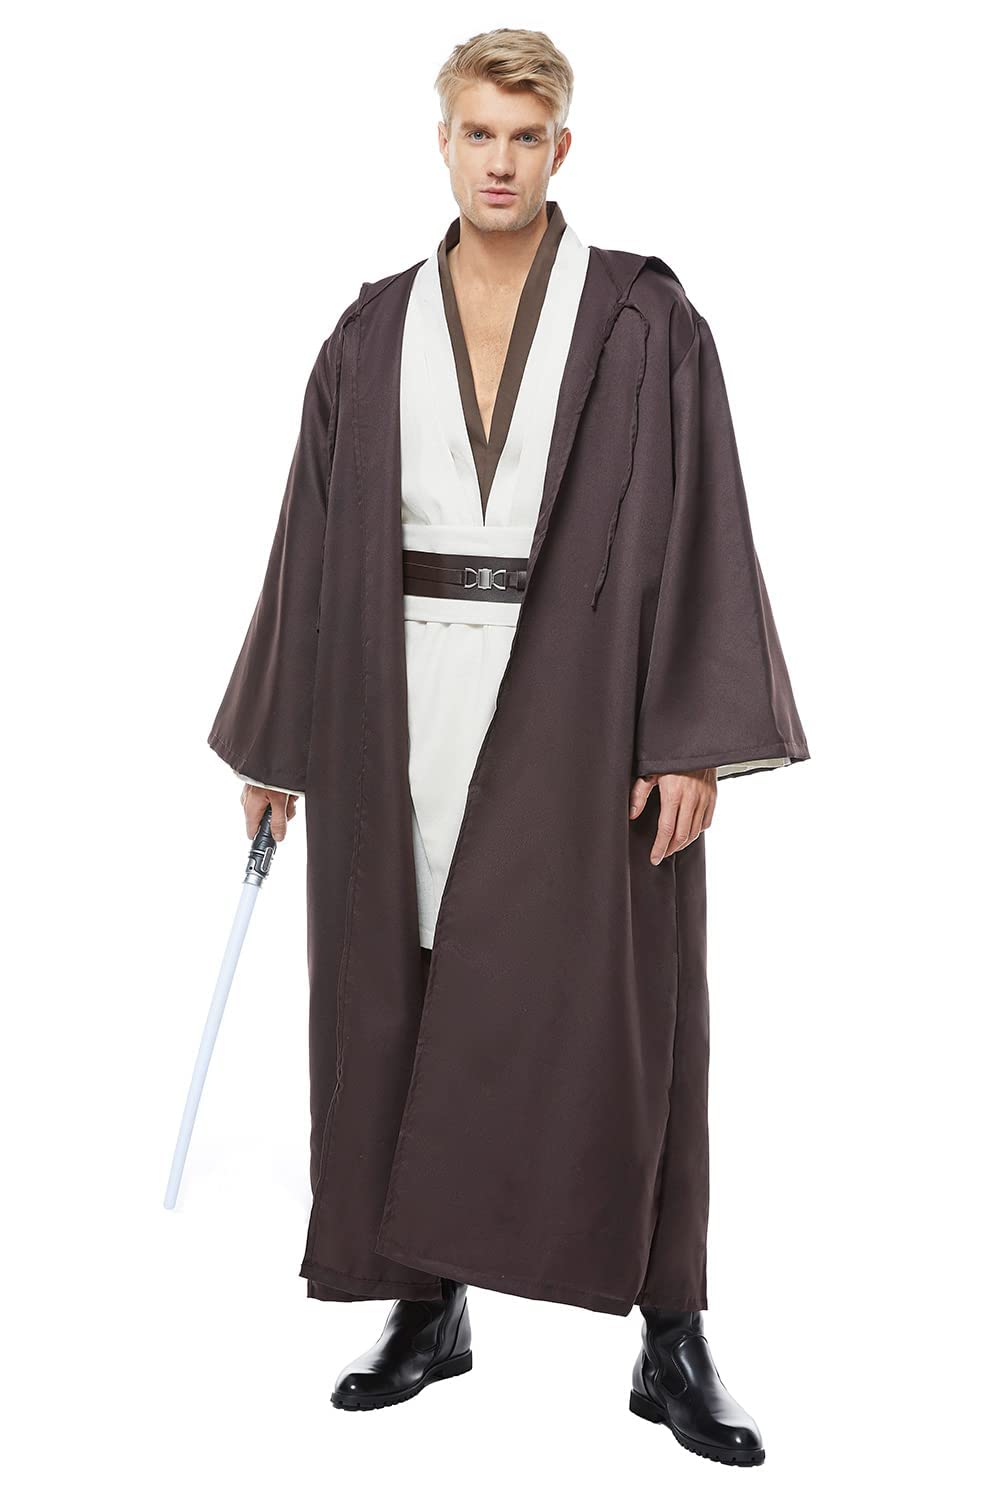 Kostor Obi Wan Kenobi Cosplay Kostüme für Erwachsene Herren XXL